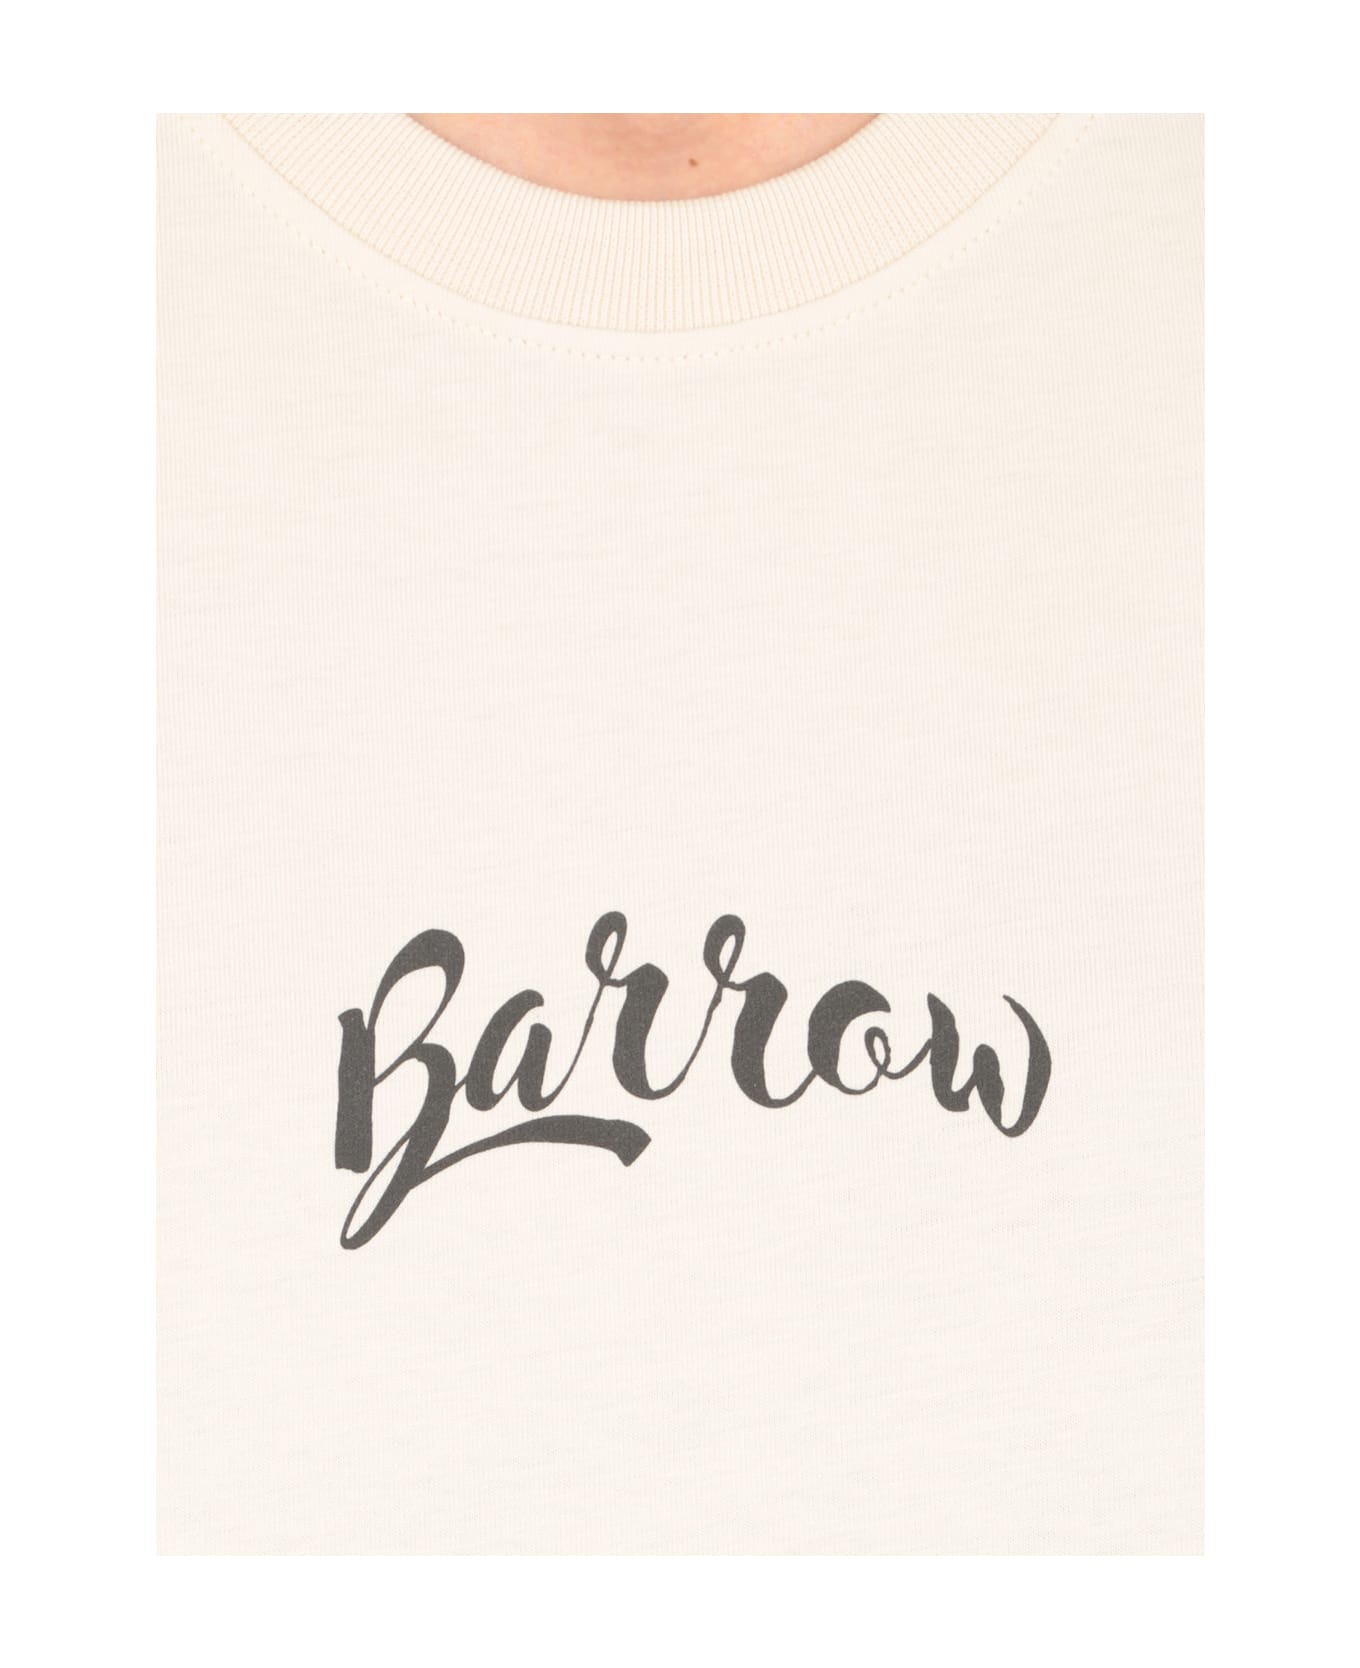 Barrow T-shirt With Logo